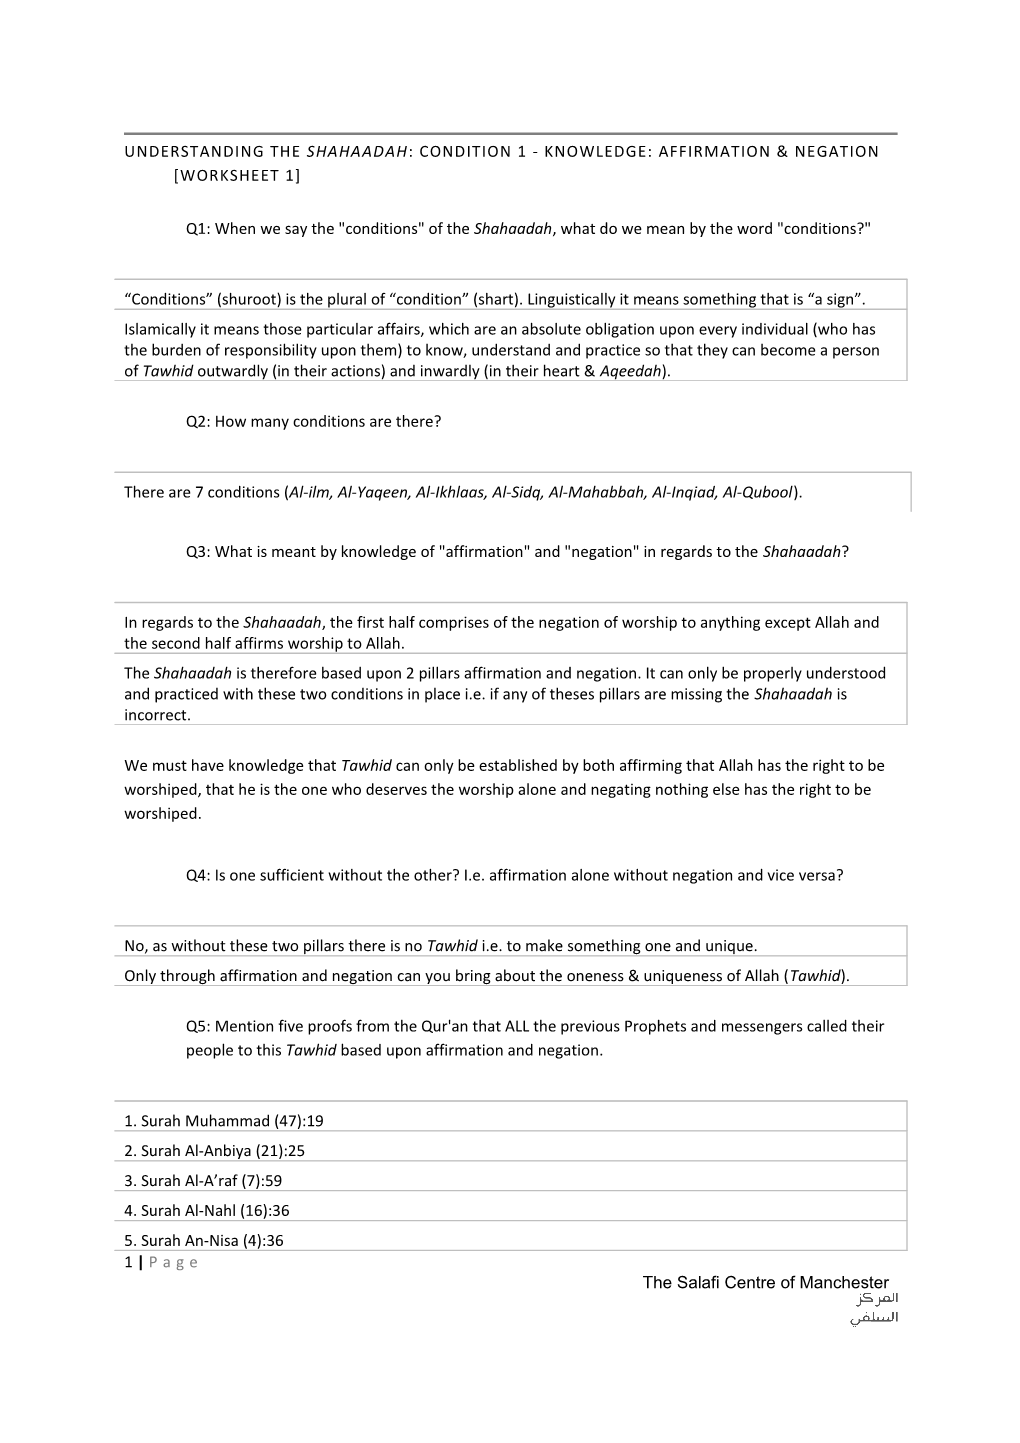 Understanding the Shahaadah: Condition 1 - Knowledge: Affirmation & Negation Worksheet 1